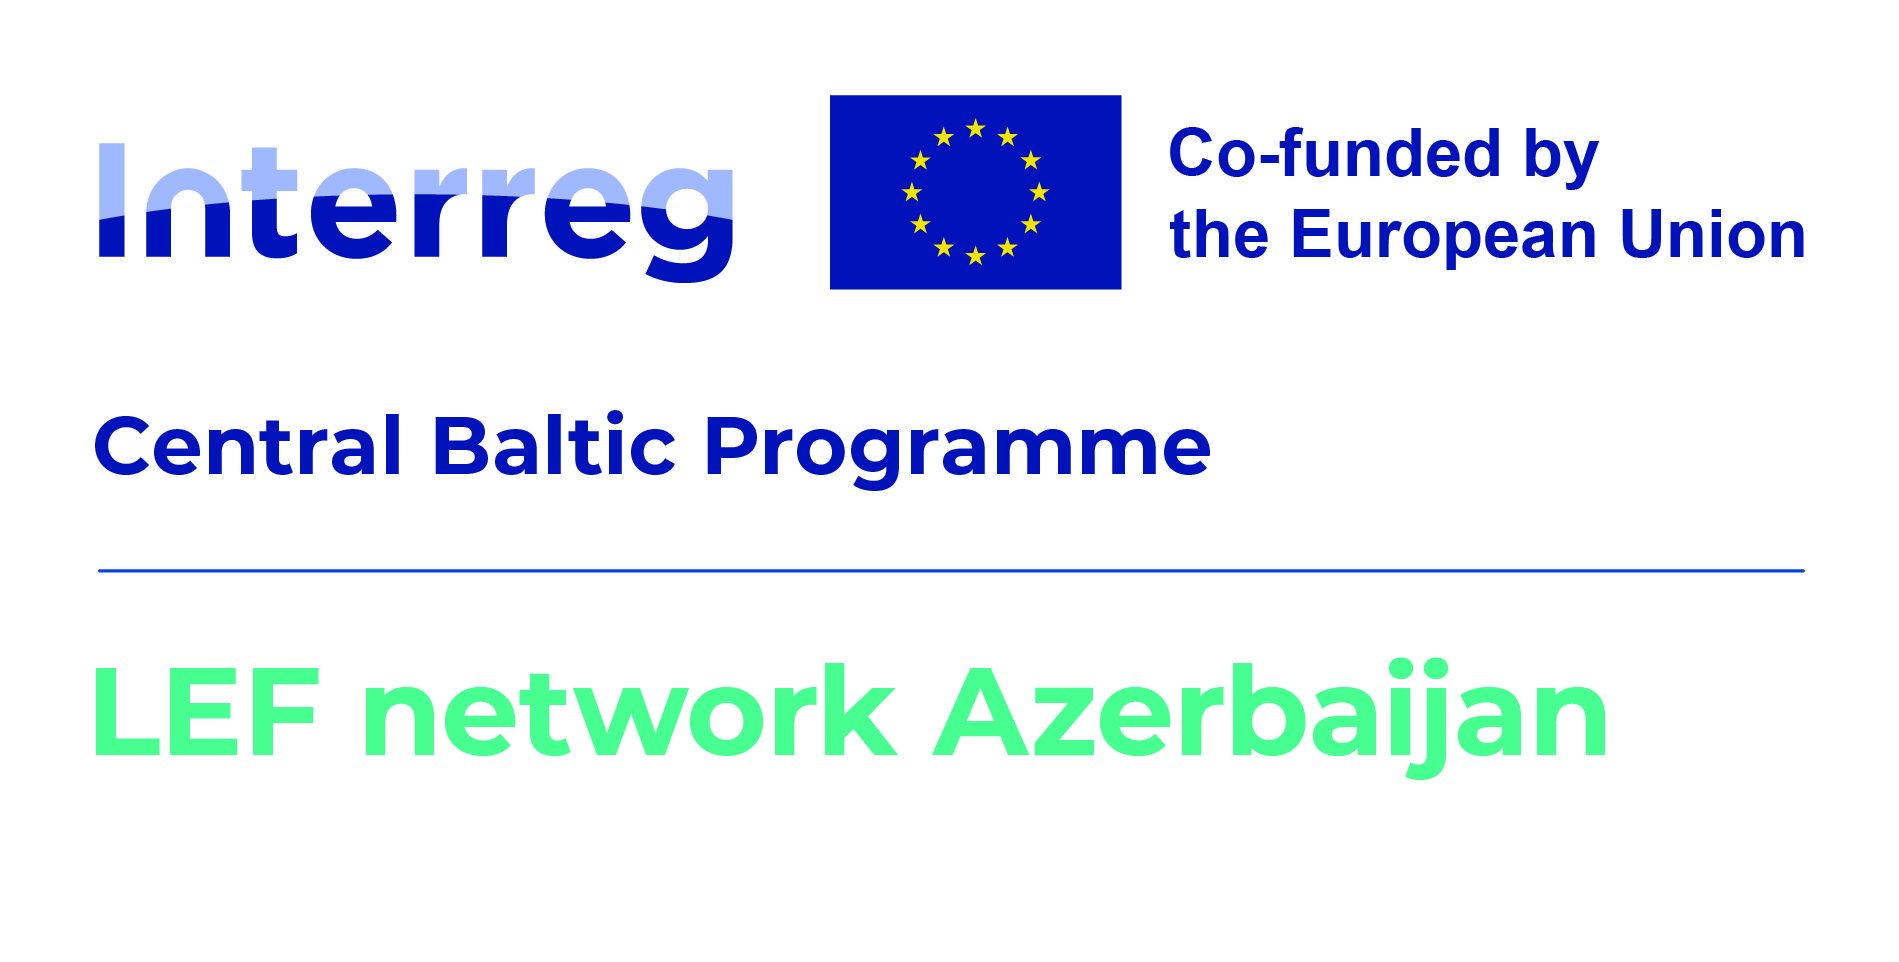 Central Baltic LEF network Azerbaijan